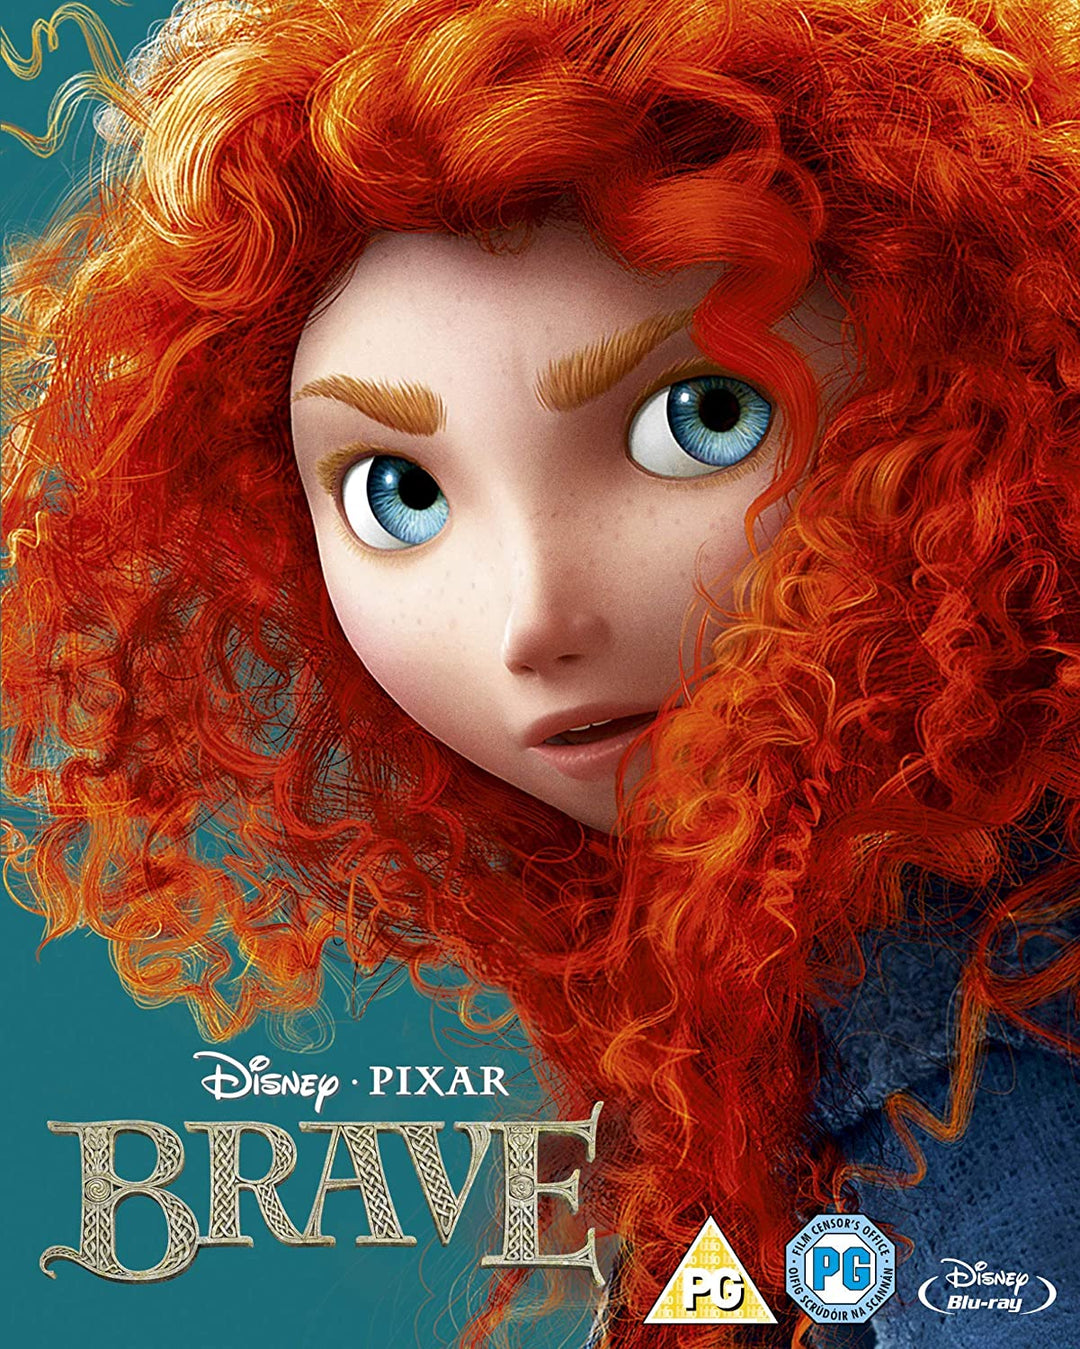 Brave [Region Free] - Family/Adventure [DVD]